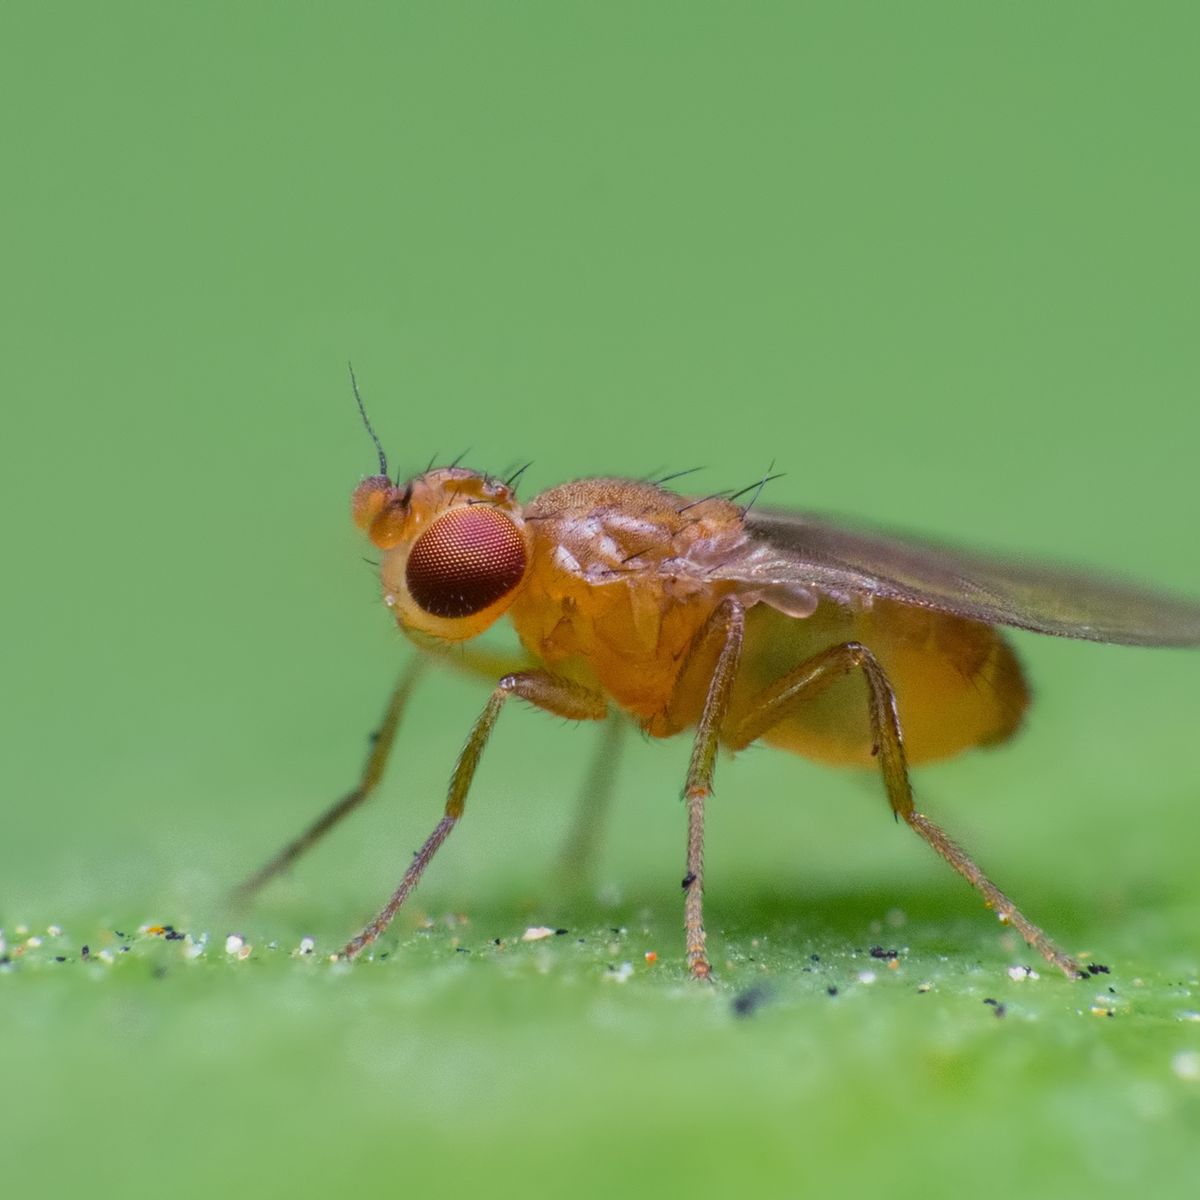 https://hips.hearstapps.com/hmg-prod/images/macro-of-a-drosophila-fruit-fly-royalty-free-image-1598887519.jpg?crop=0.651xw:0.868xh;0.234xw,0.0833xh&resize=1200:*